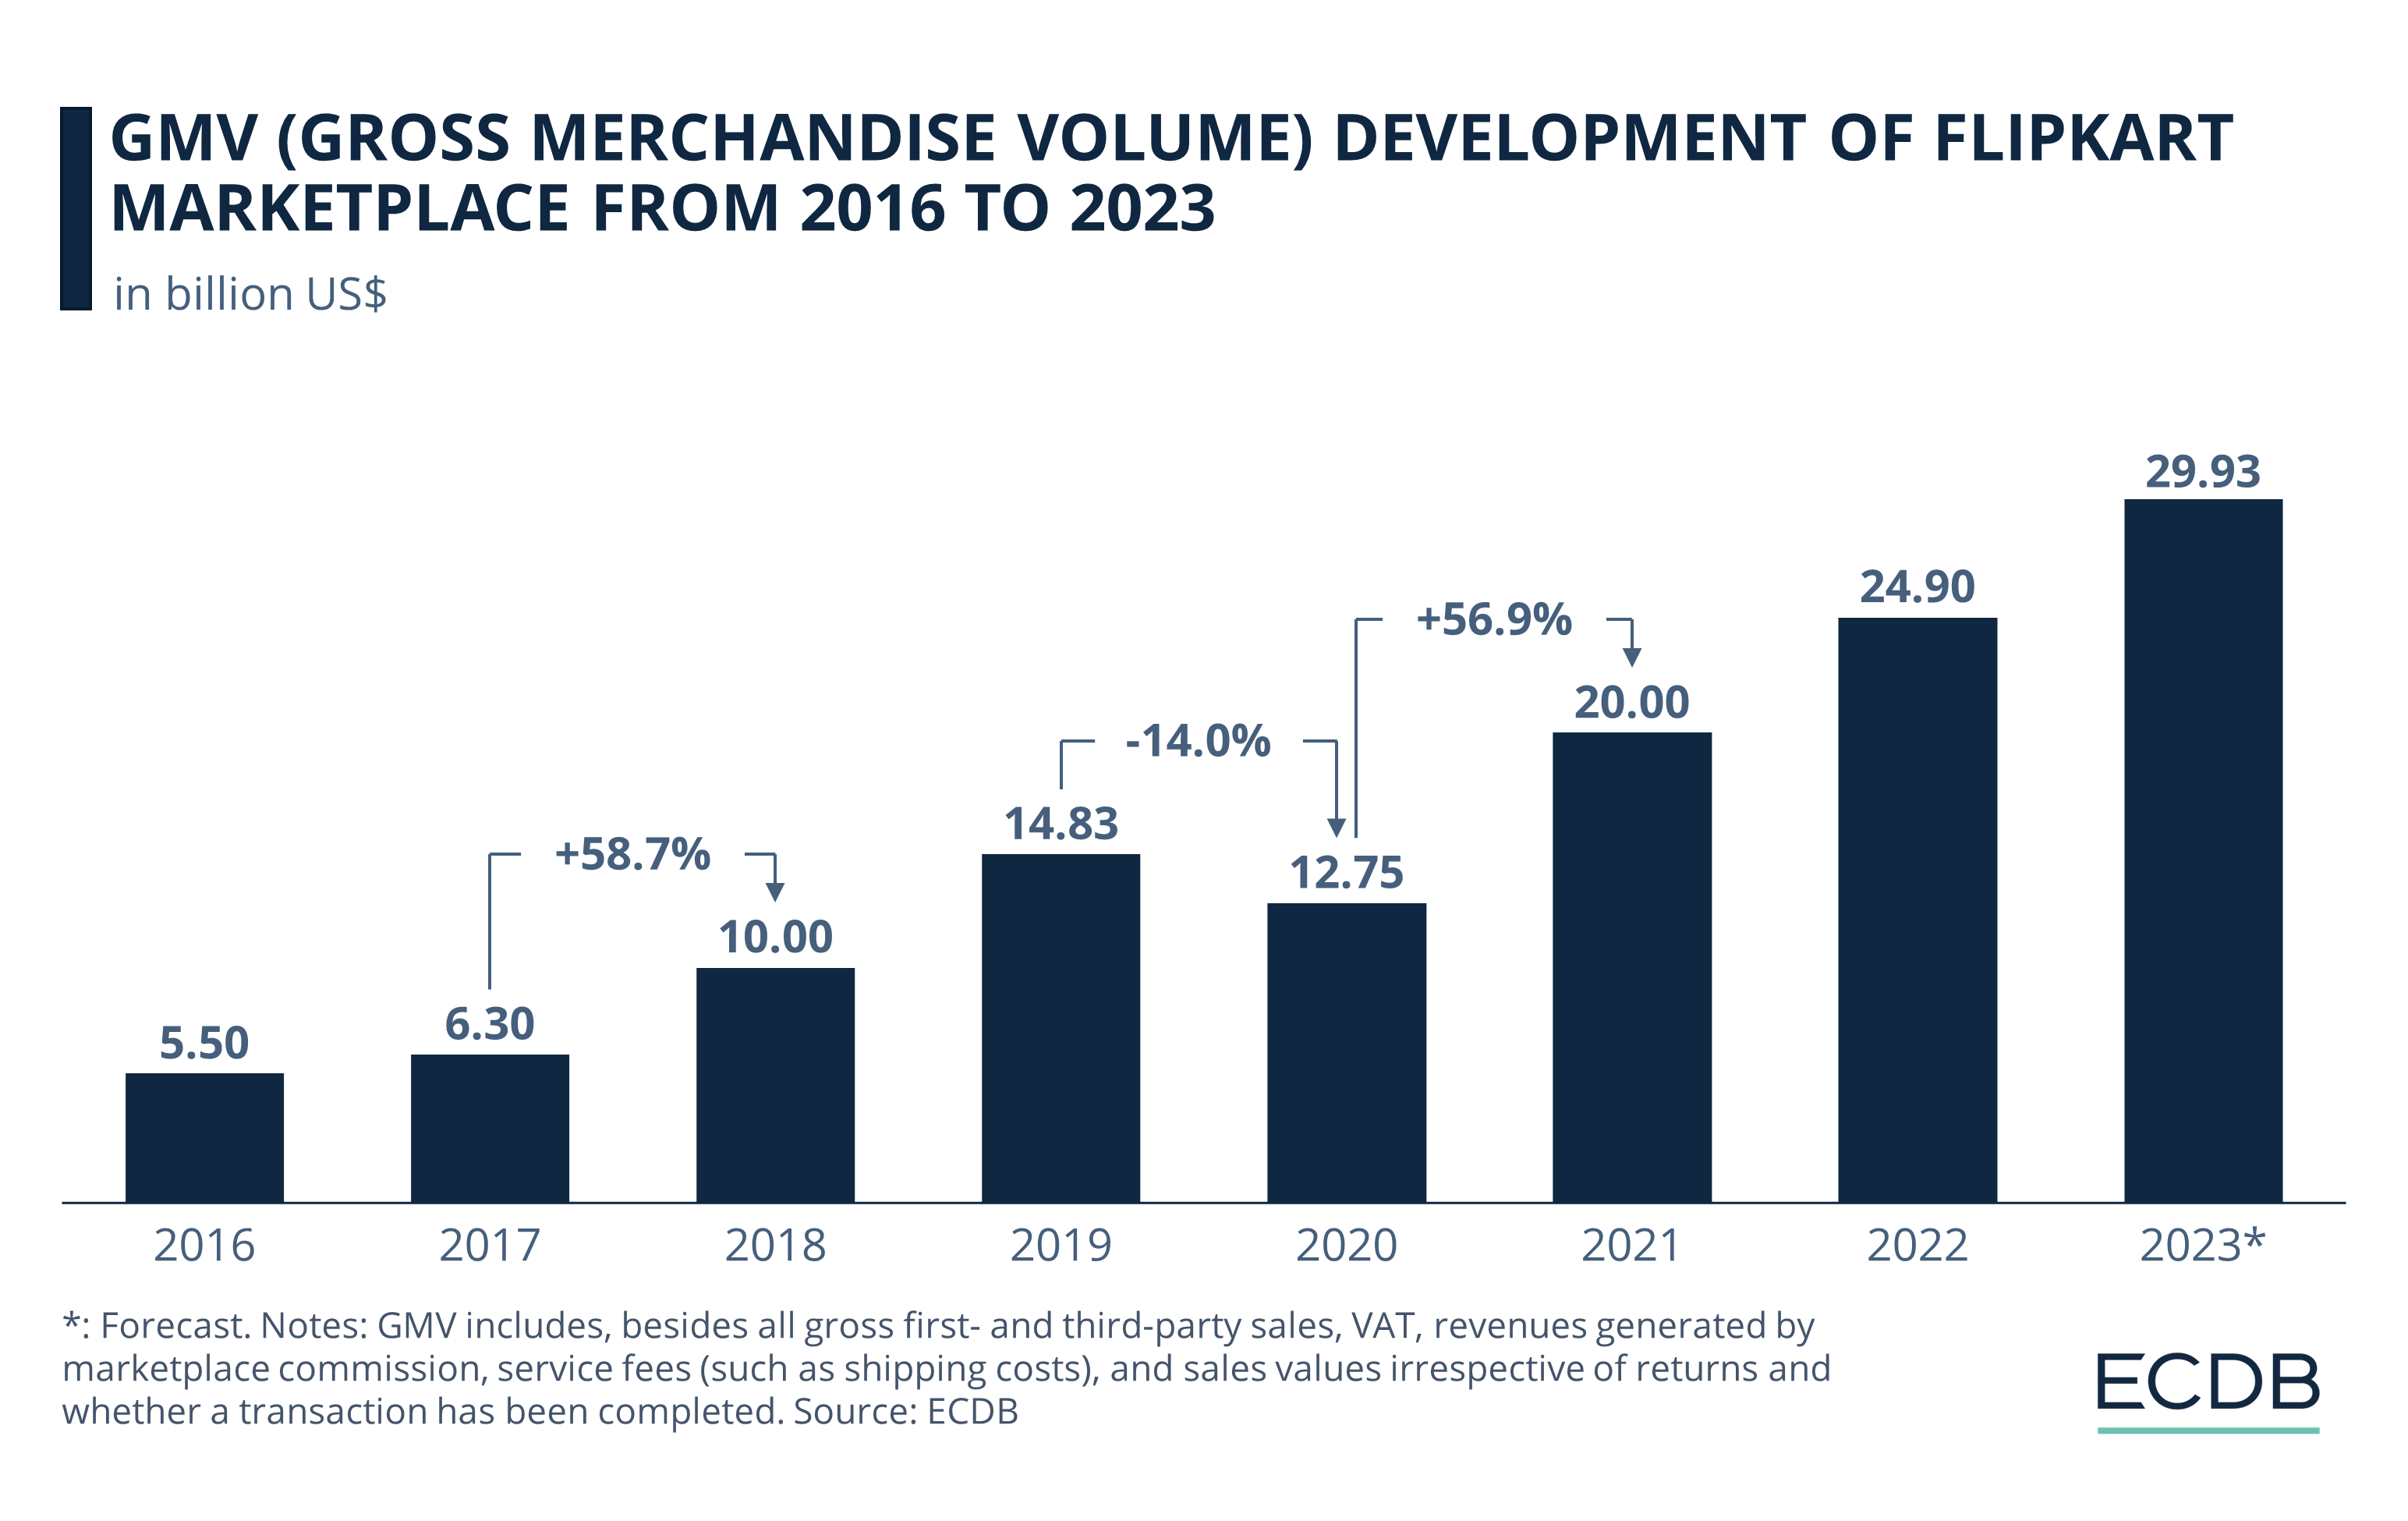 GMV (Gross Merchandise Volume) Development of Flipkart Marketplace from 2016 to 2023